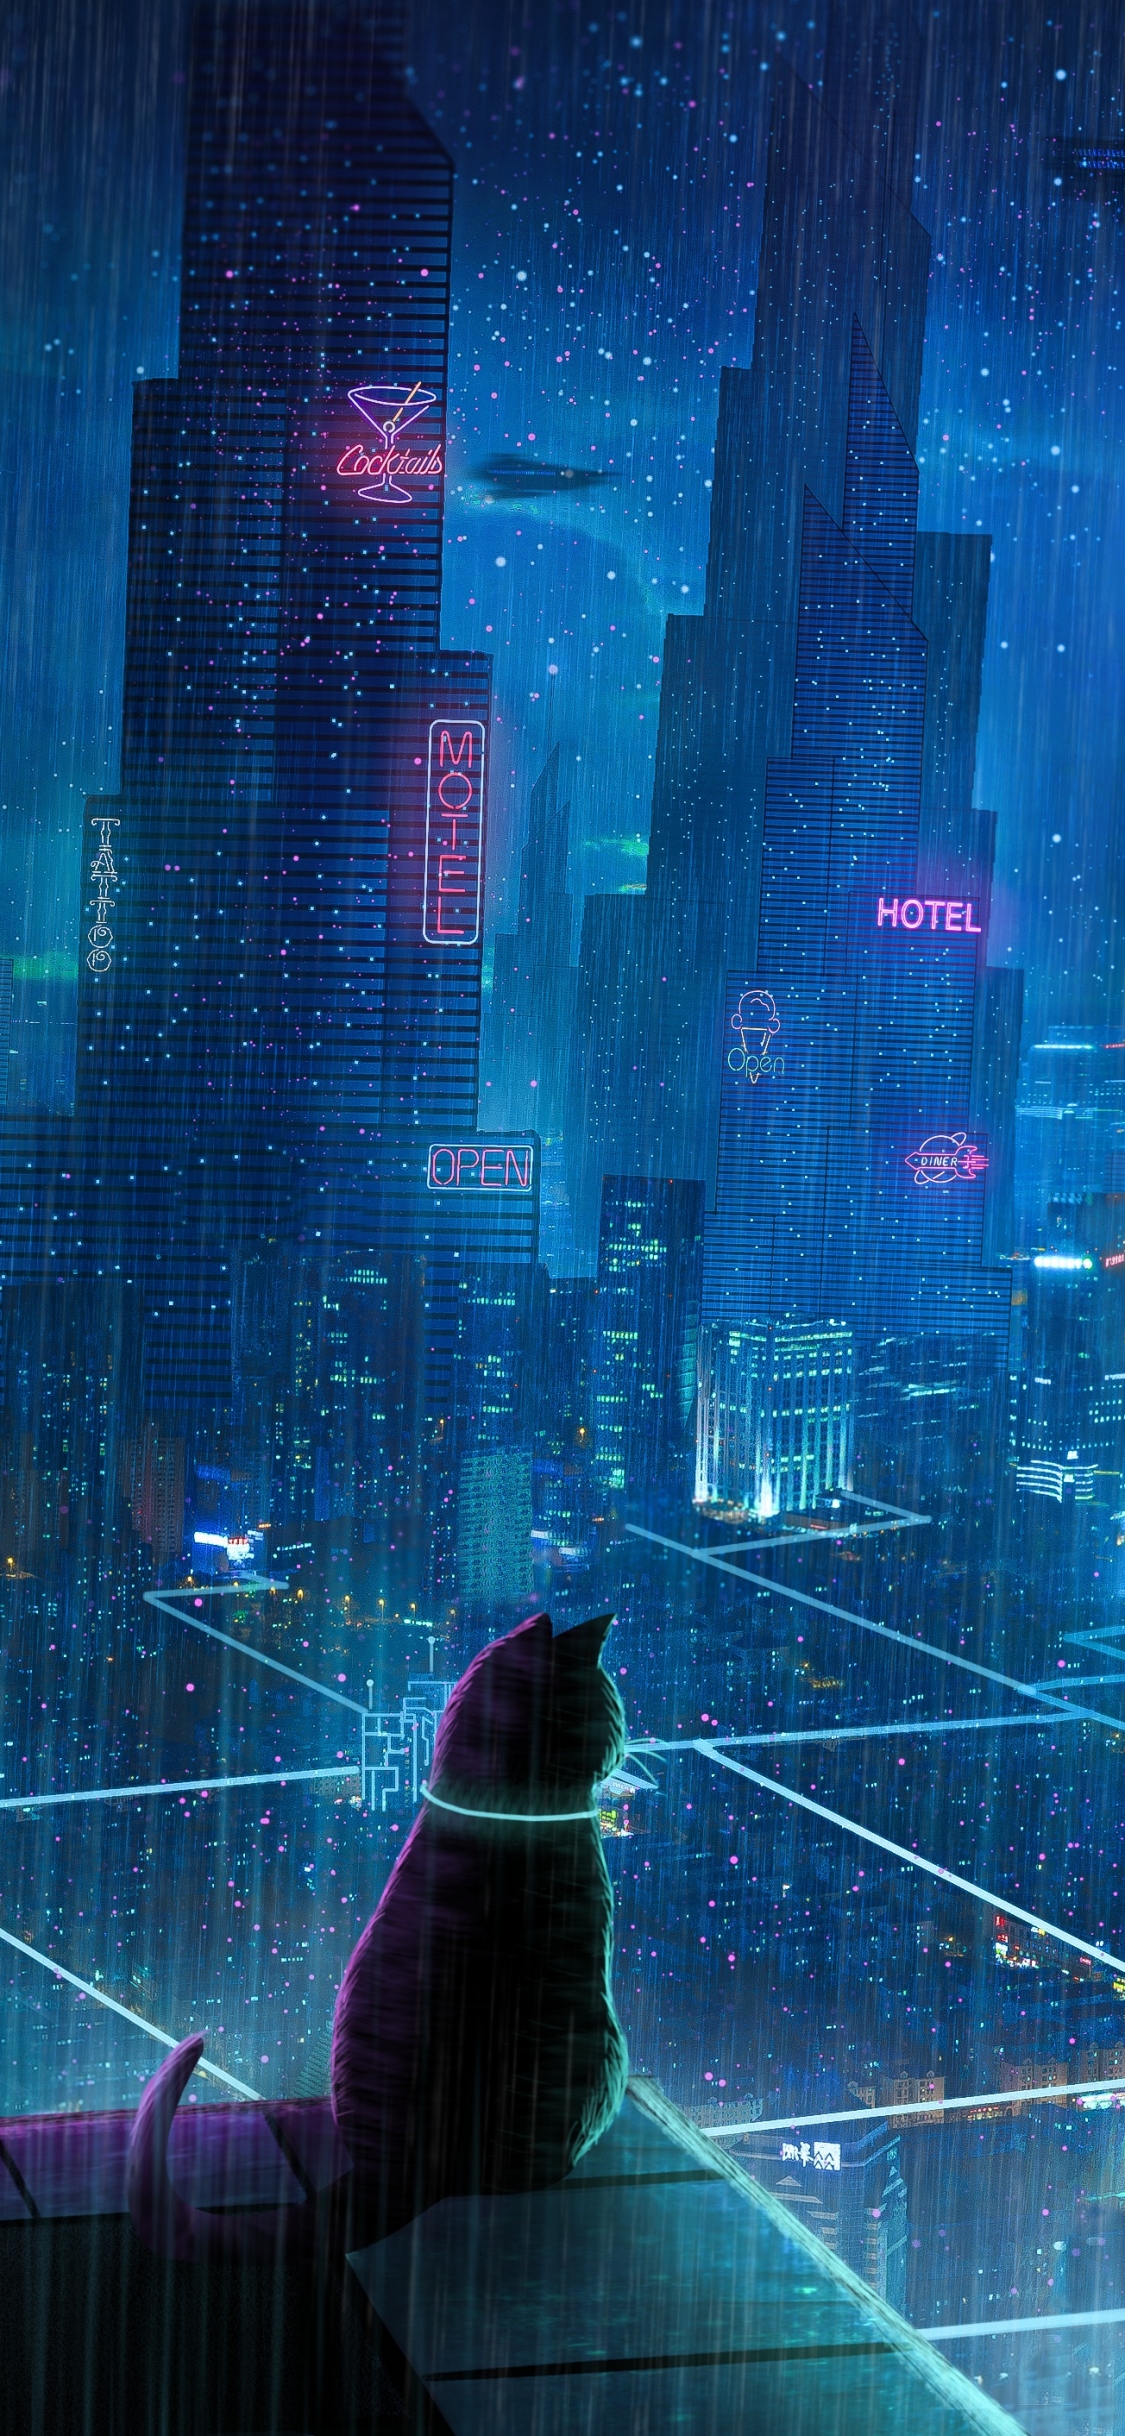 City Under Rain 2K wallpaper download